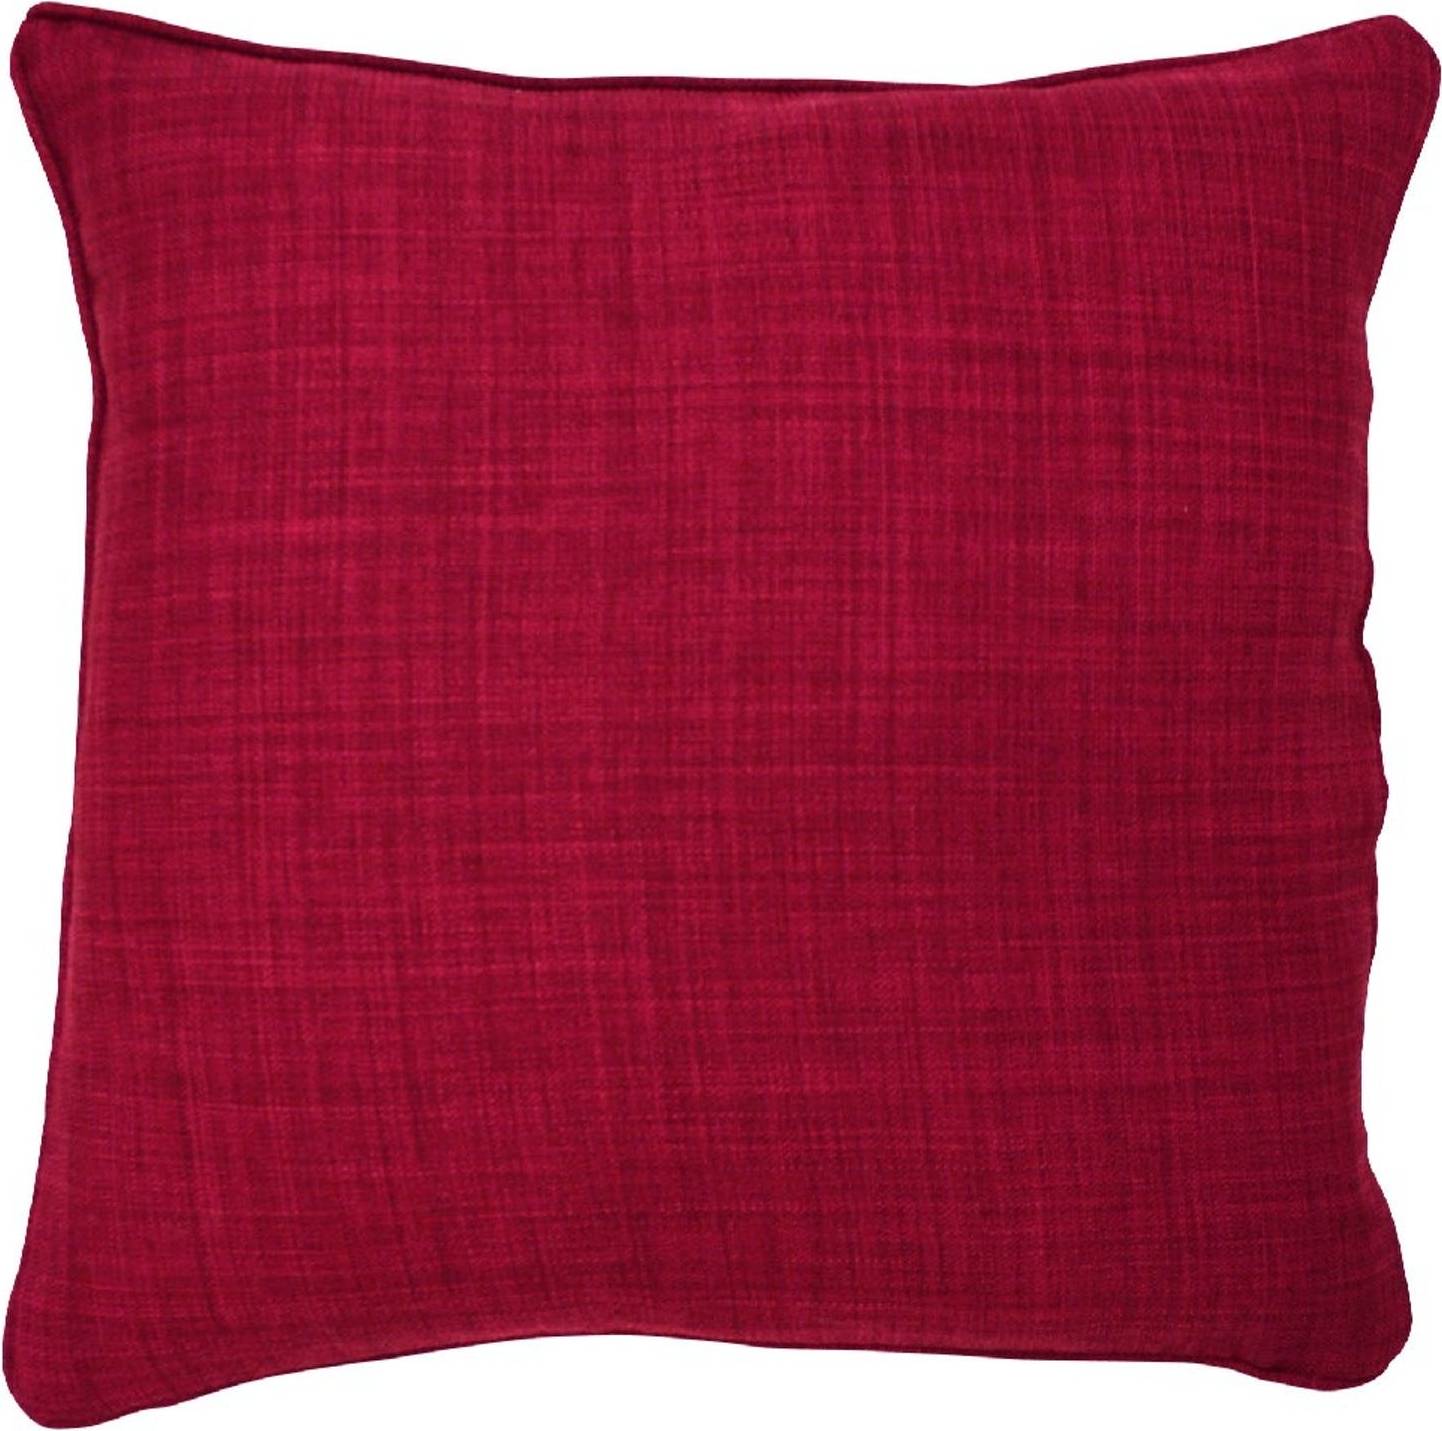  Bild på Arvidssons Textil Spektra Kuddöverdrag Röd (45x45cm) prydnadskudde